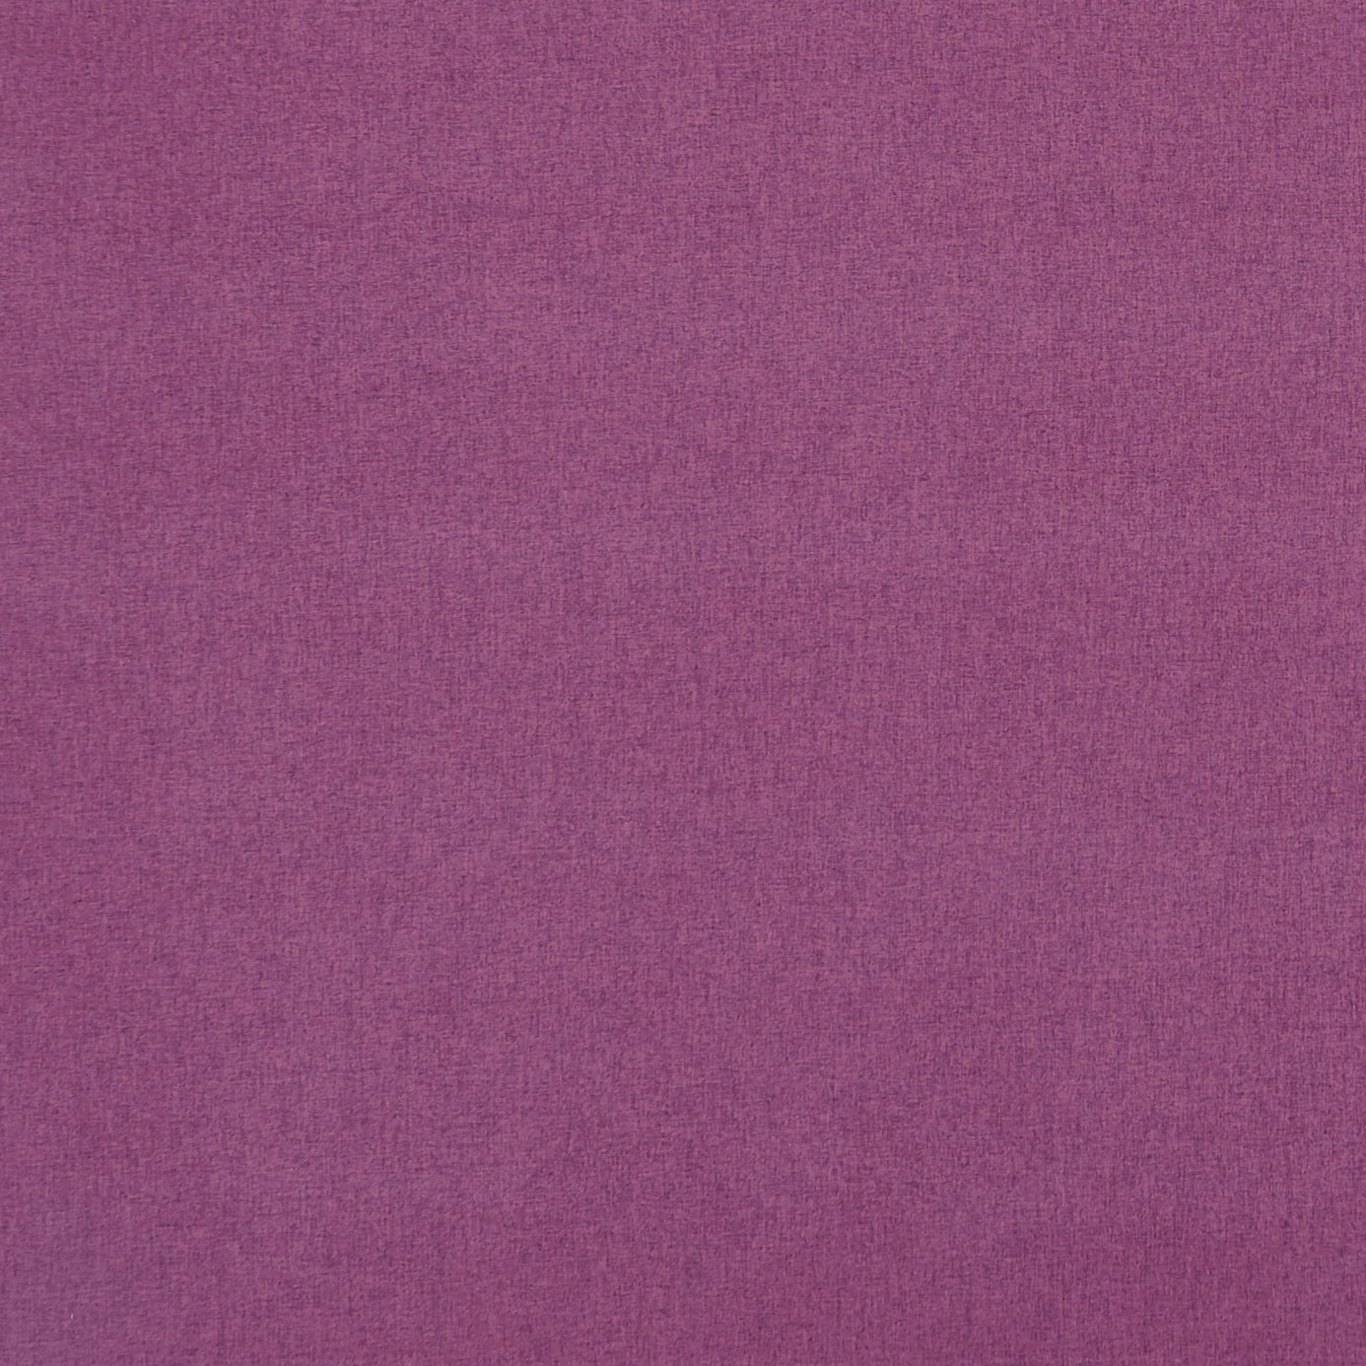 Highlander Cranberry Fabric by CNC